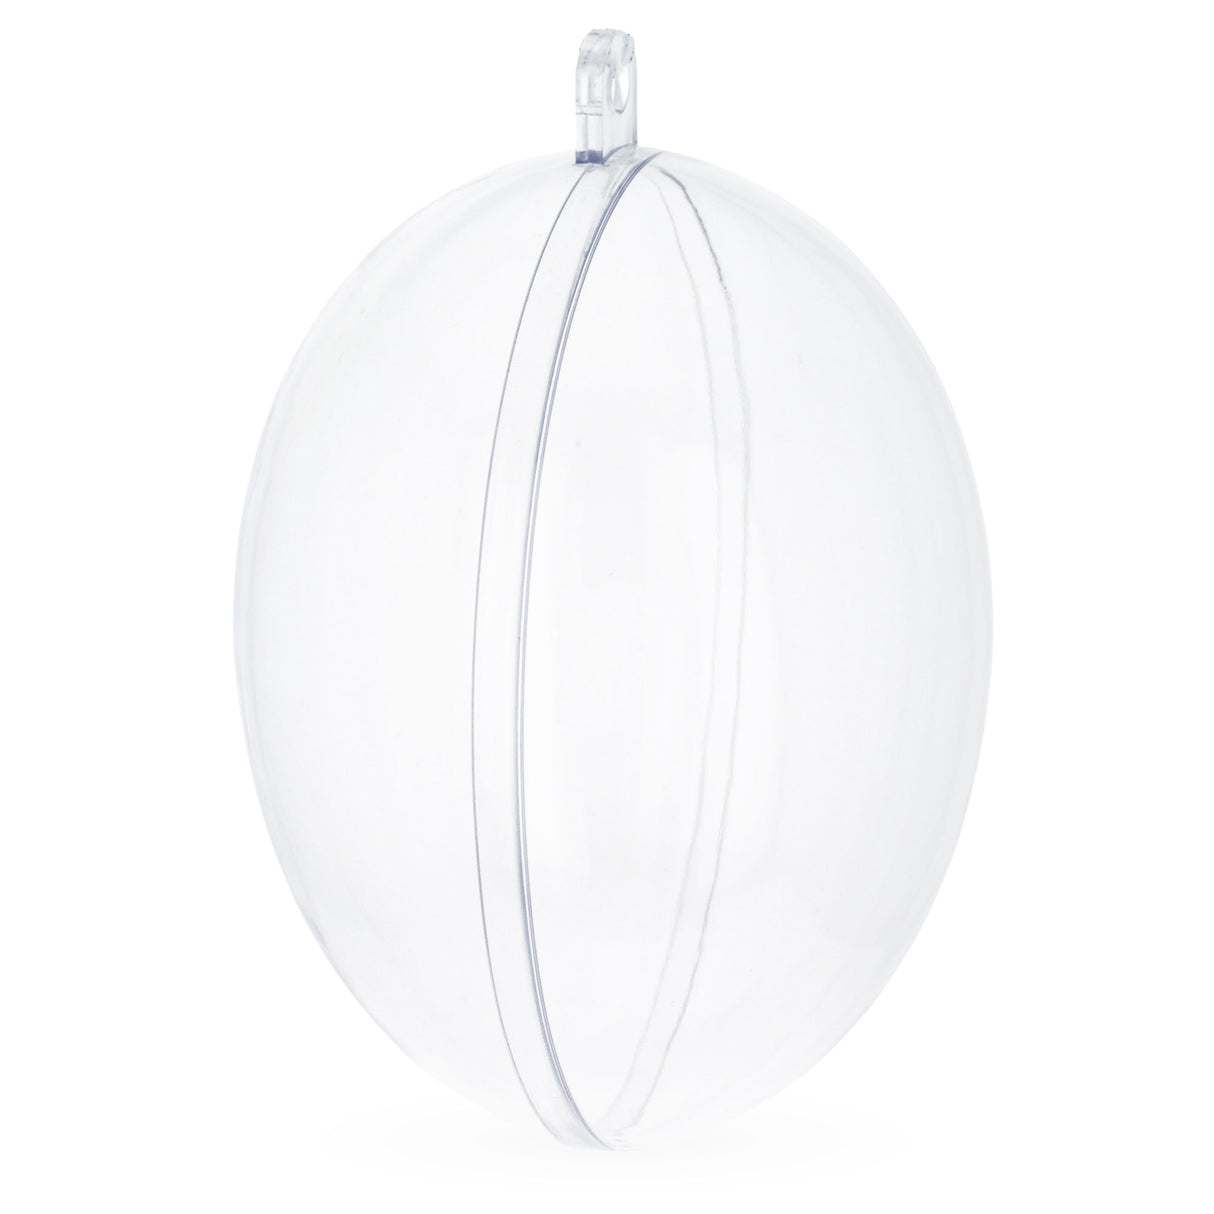 Buy Christmas Ornaments Clear Plastic Egg by BestPysanky Online Gift Ship